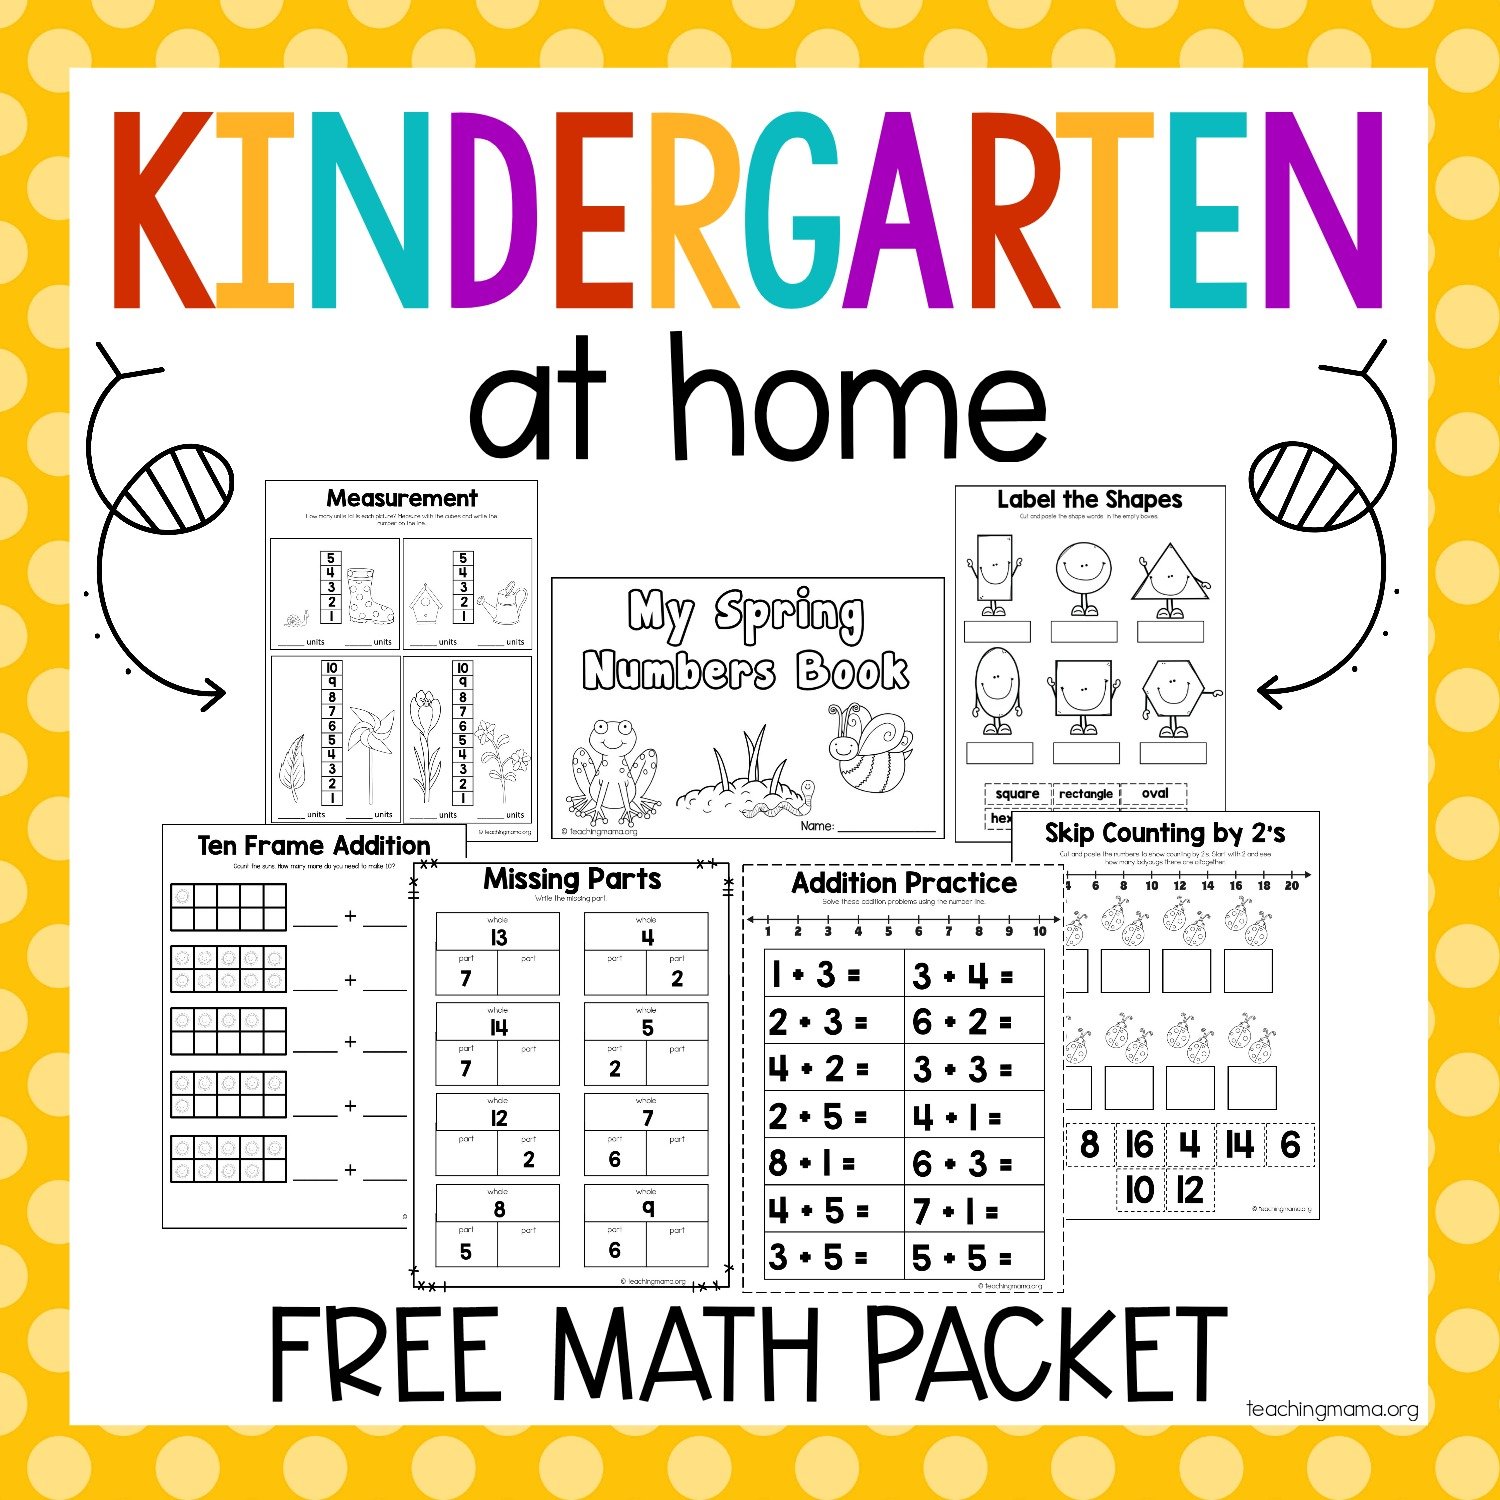 kindergarten-at-home-math-packet-teaching-mama